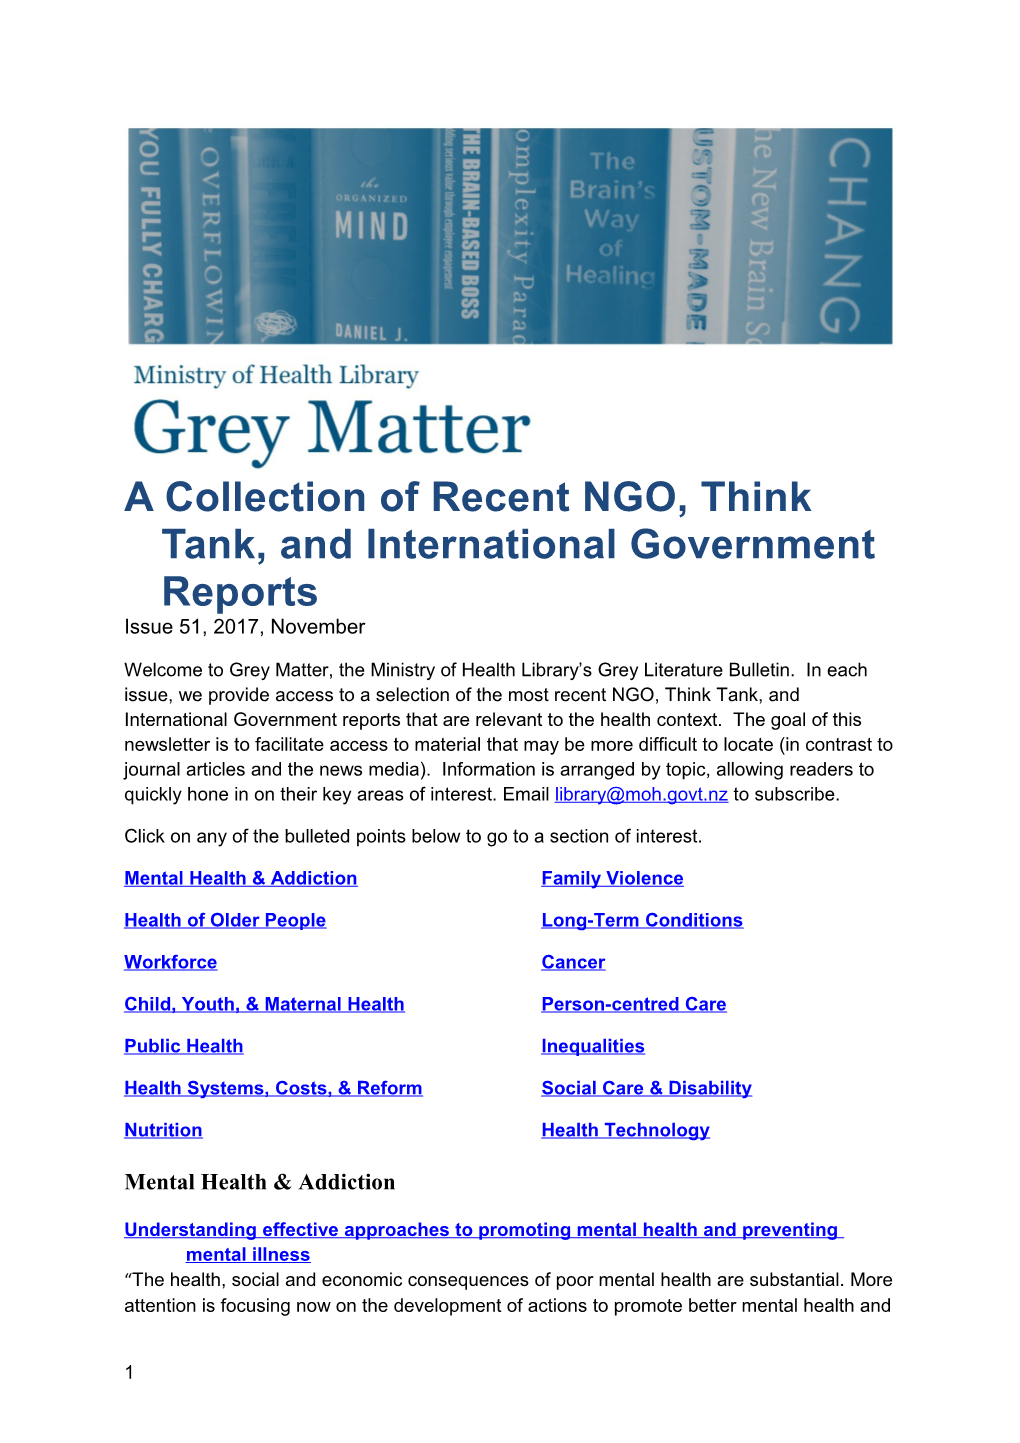 Grey Matter, Issue 51, November 2017